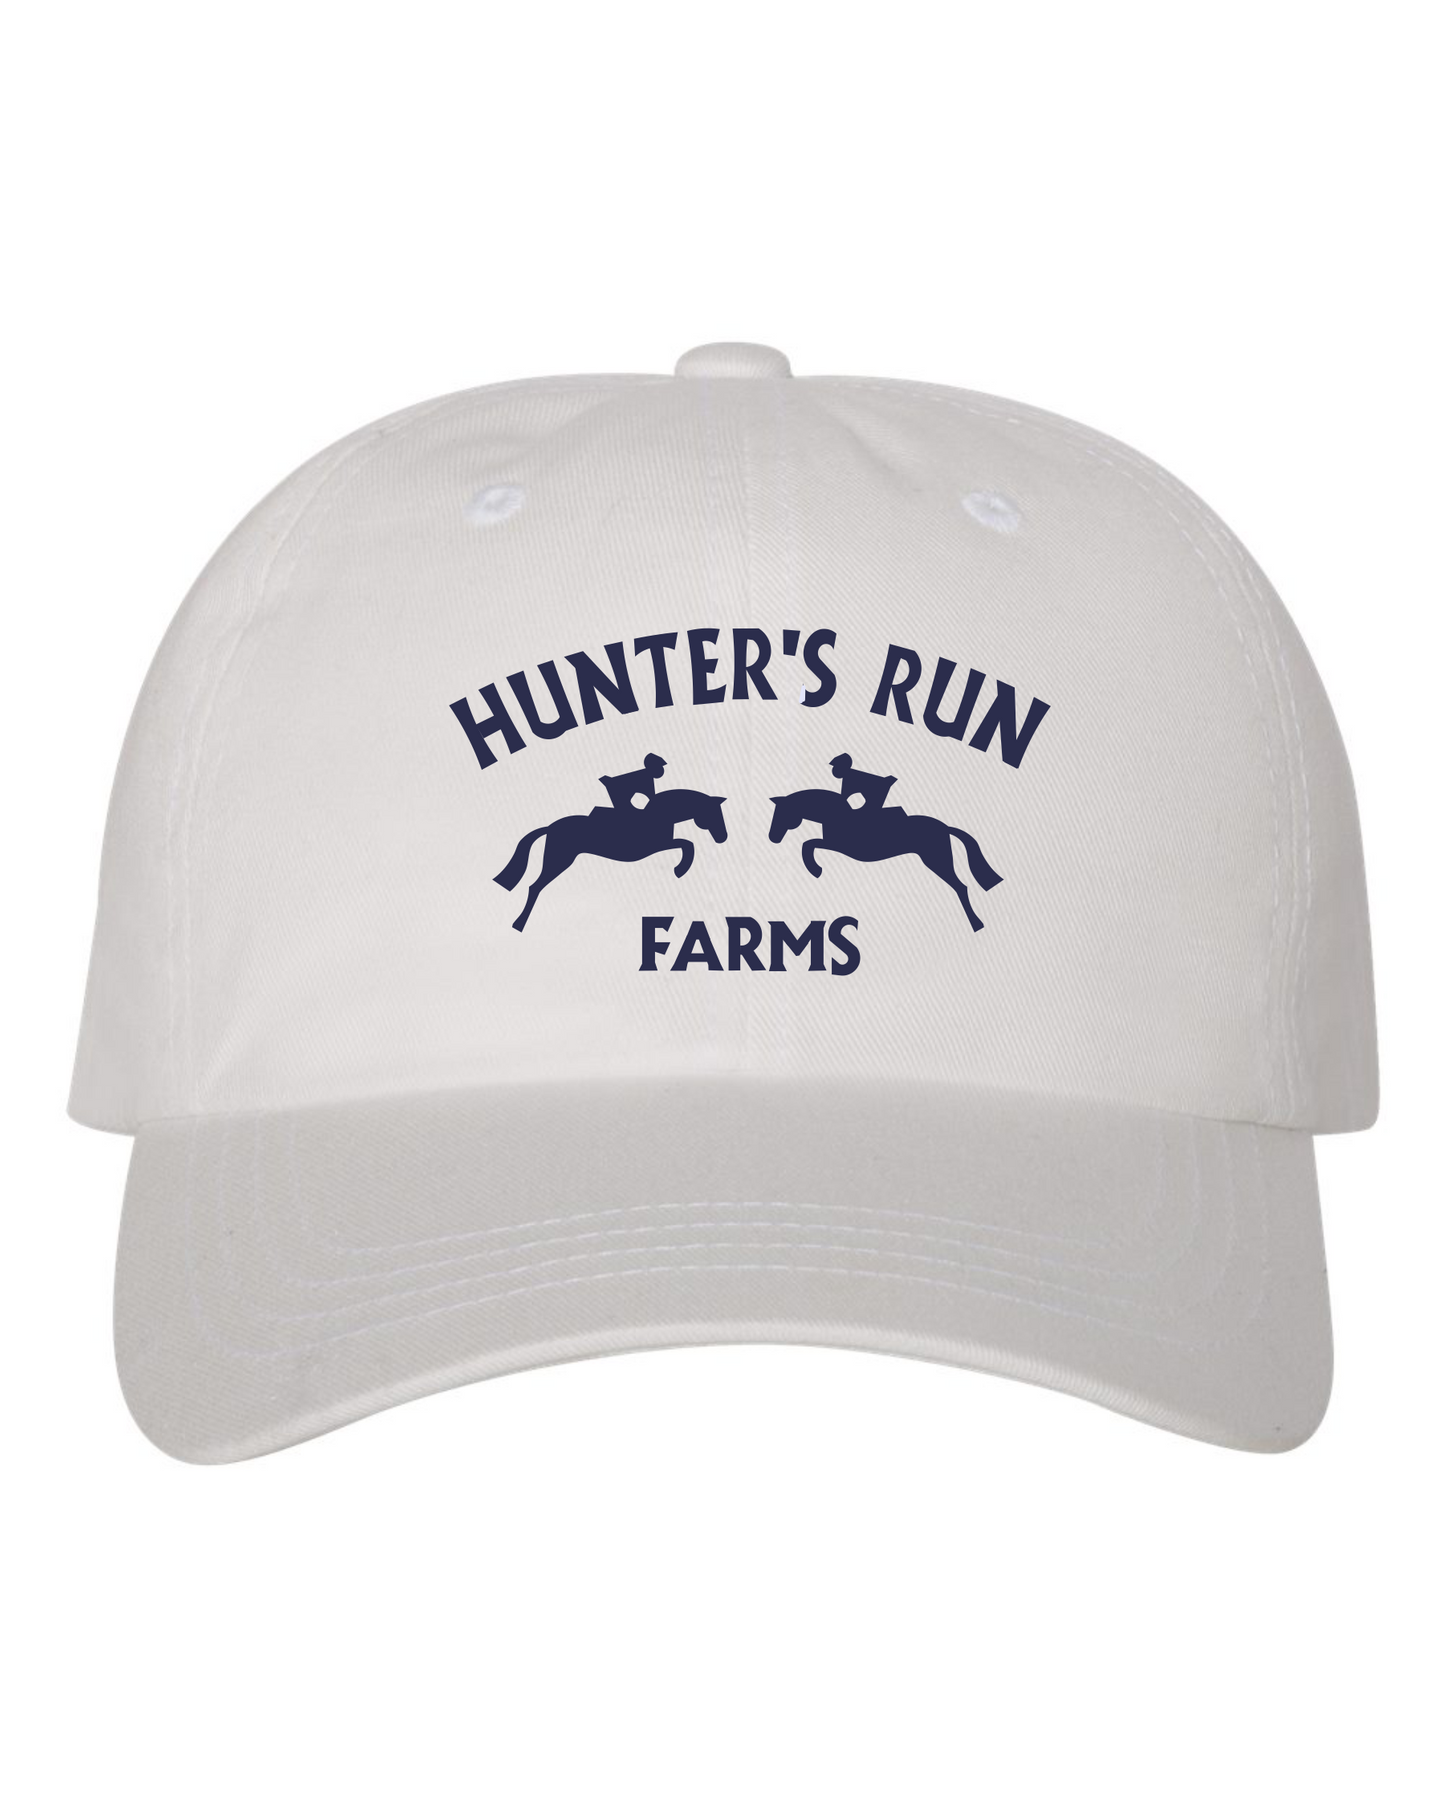 Hunter's Run Farm Unstructured hat